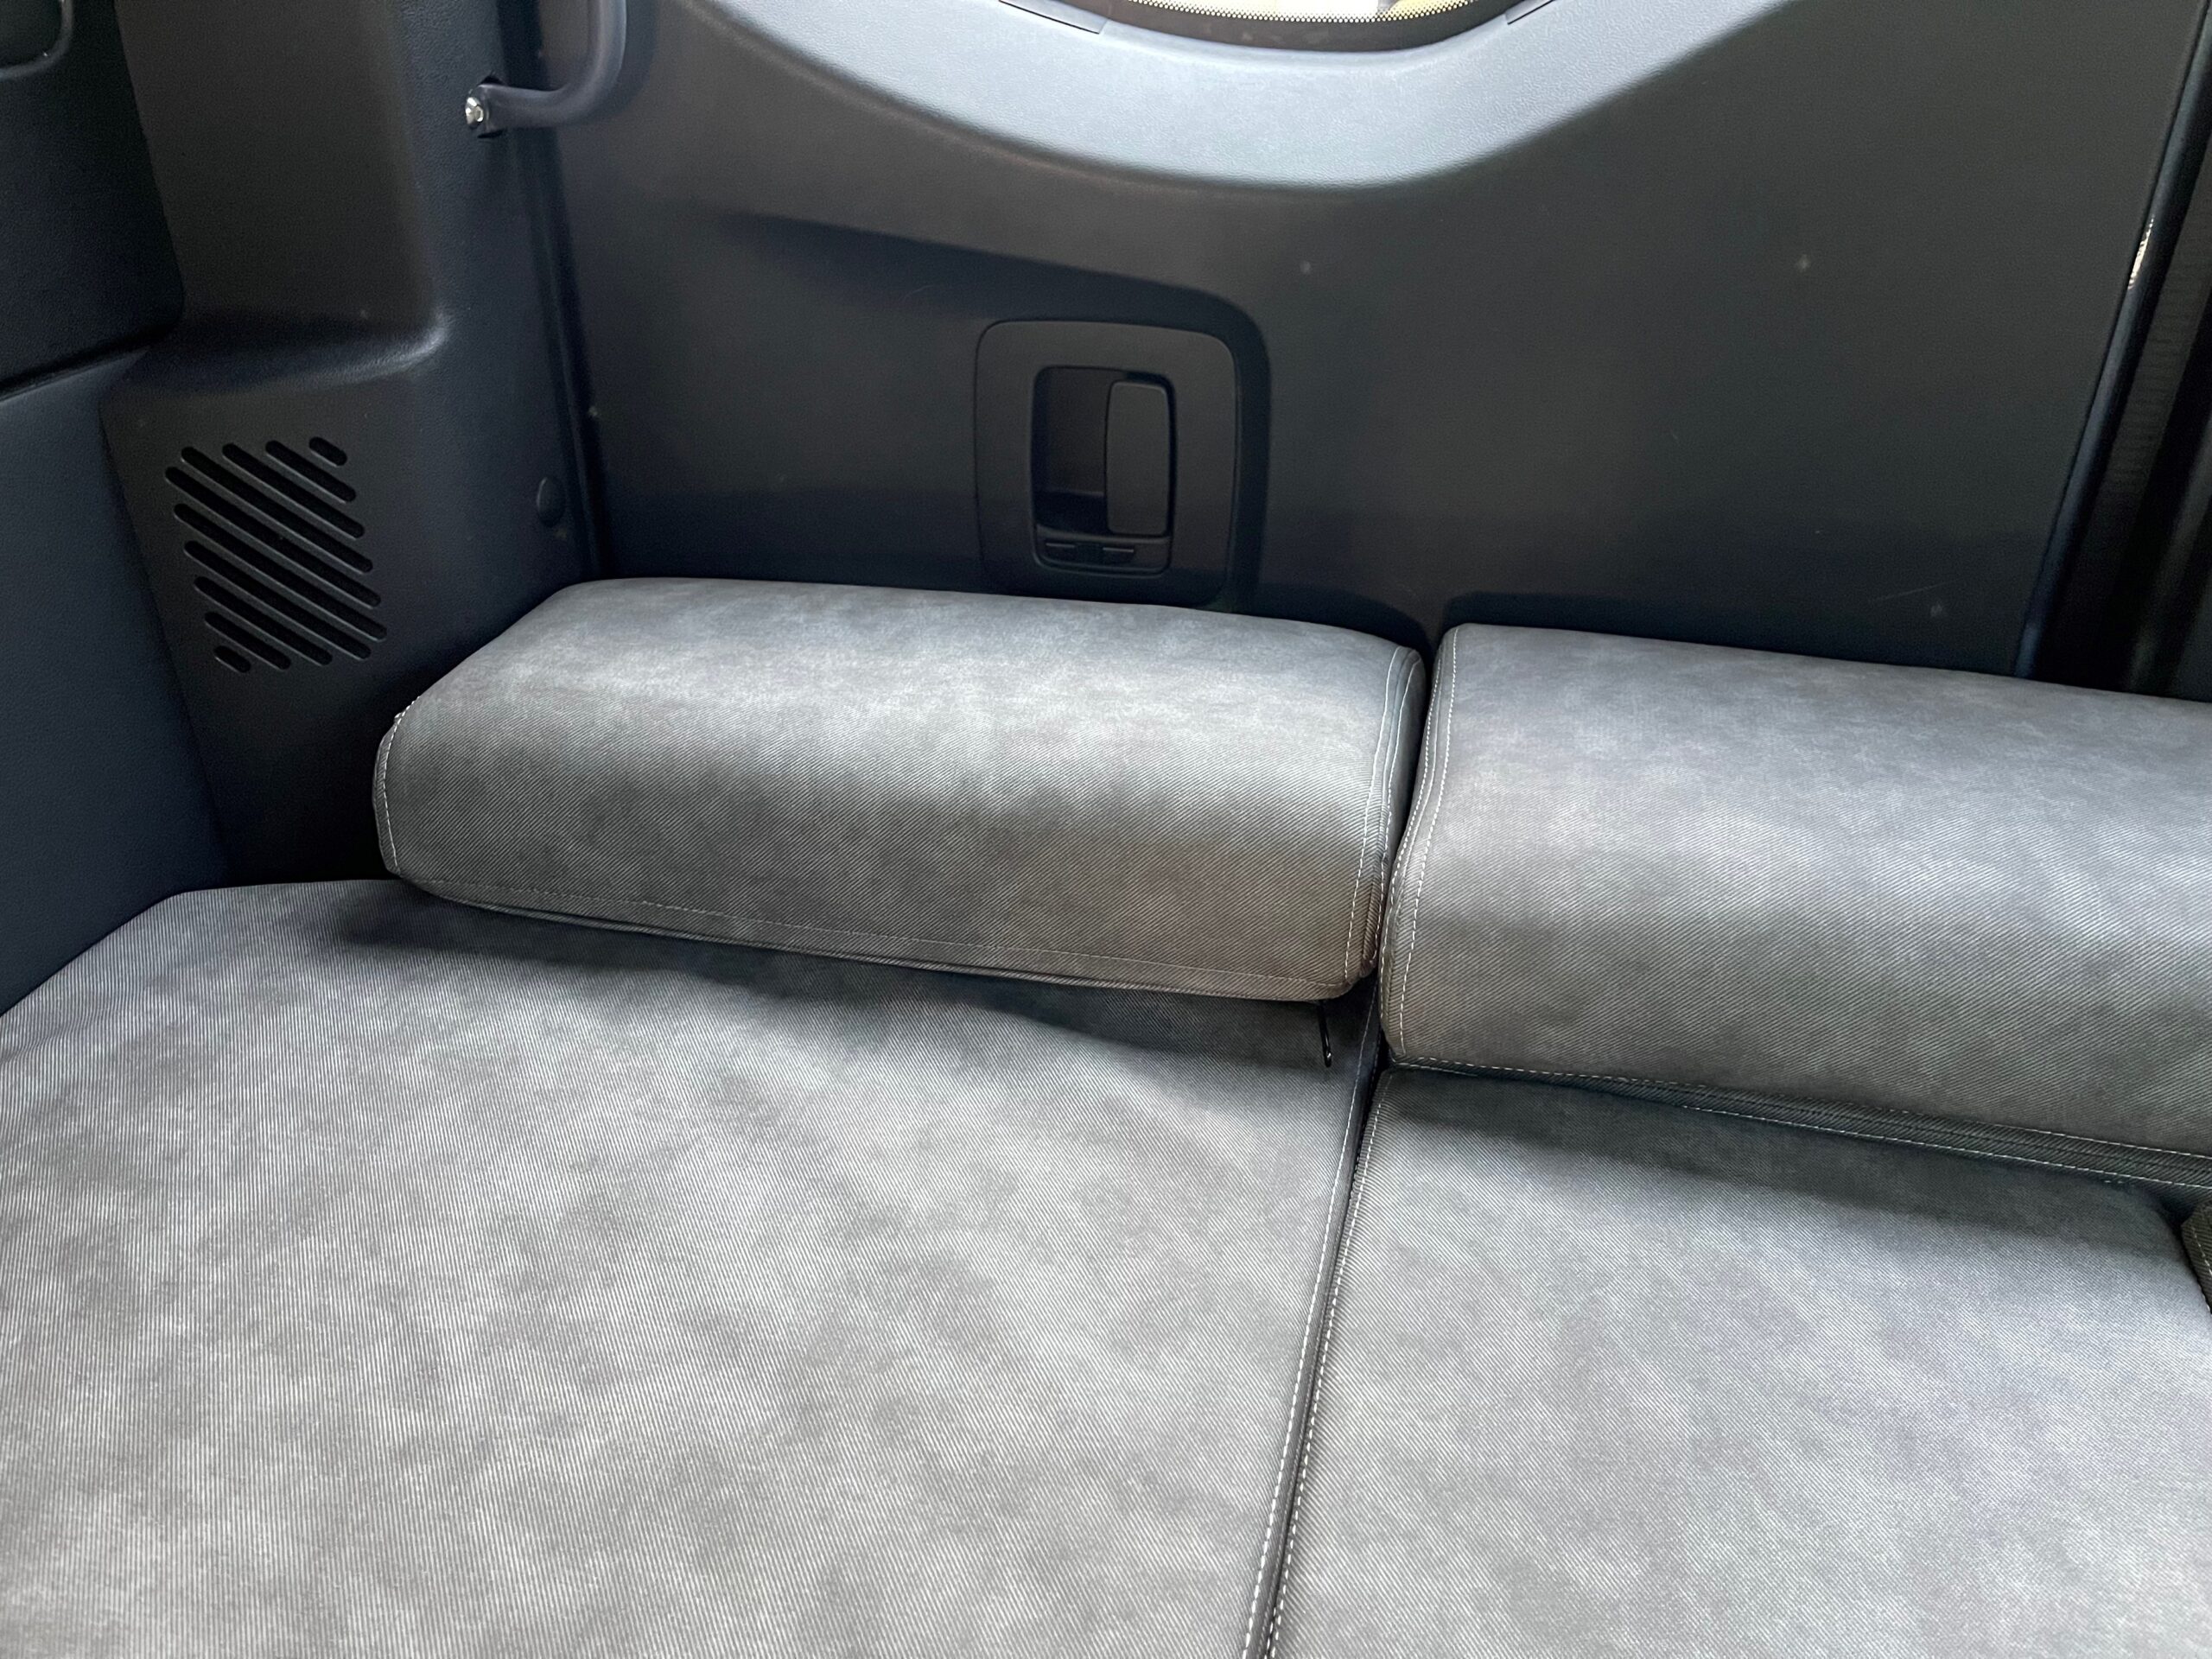 Foam Custom Arm cushions Foam Covers for Camper, RV,